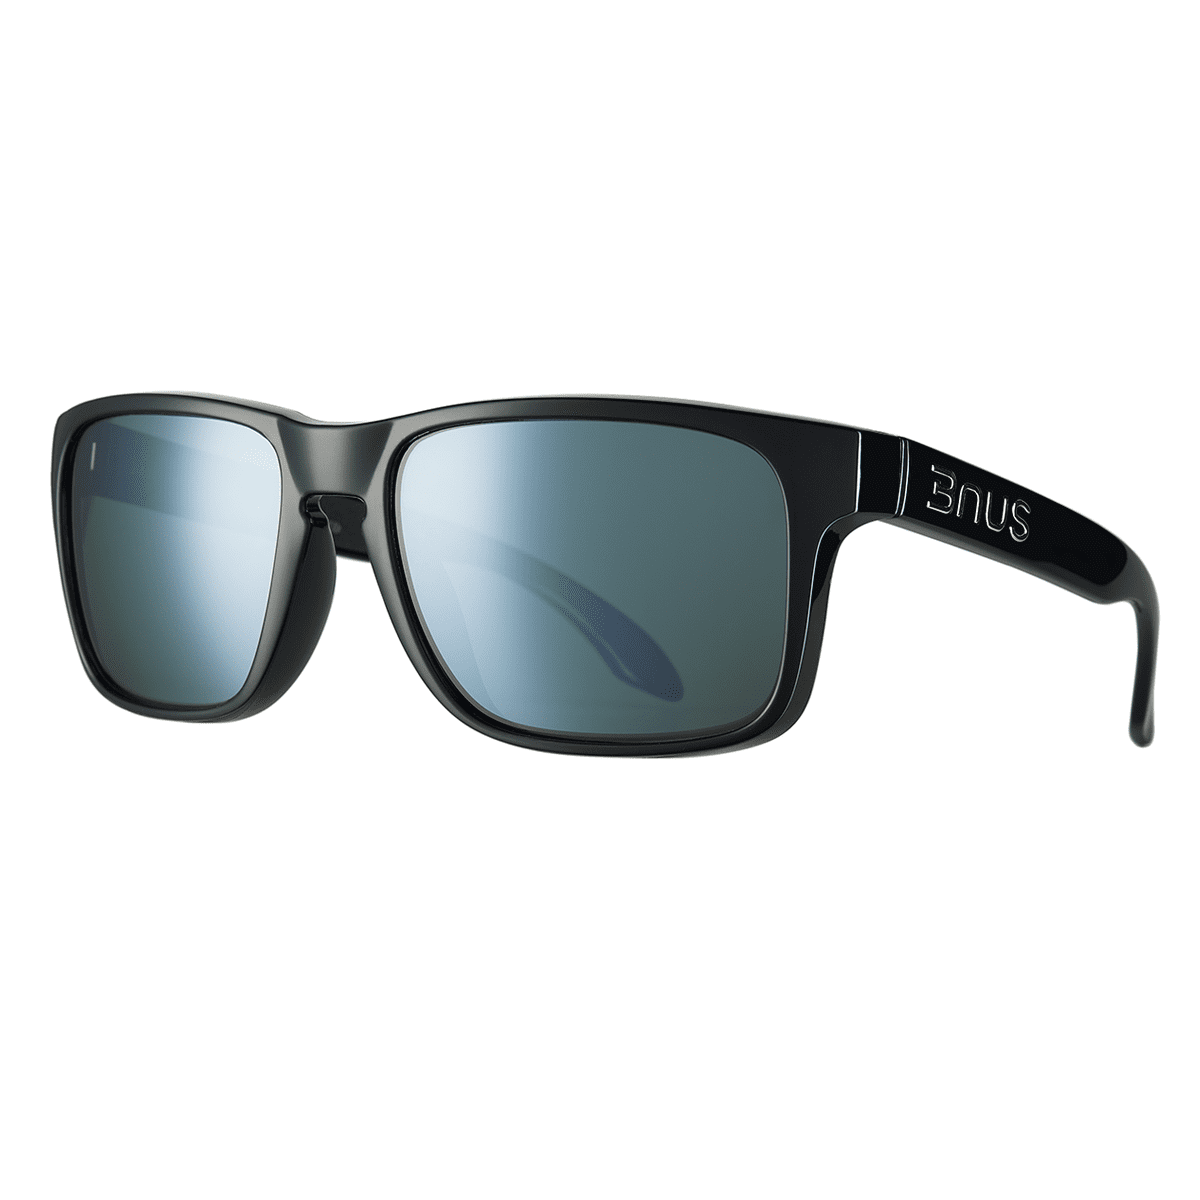 Bnus Polarized Sunglasses For Men Women Corning Real Glass Lens With Spring Hinges Shiny Black